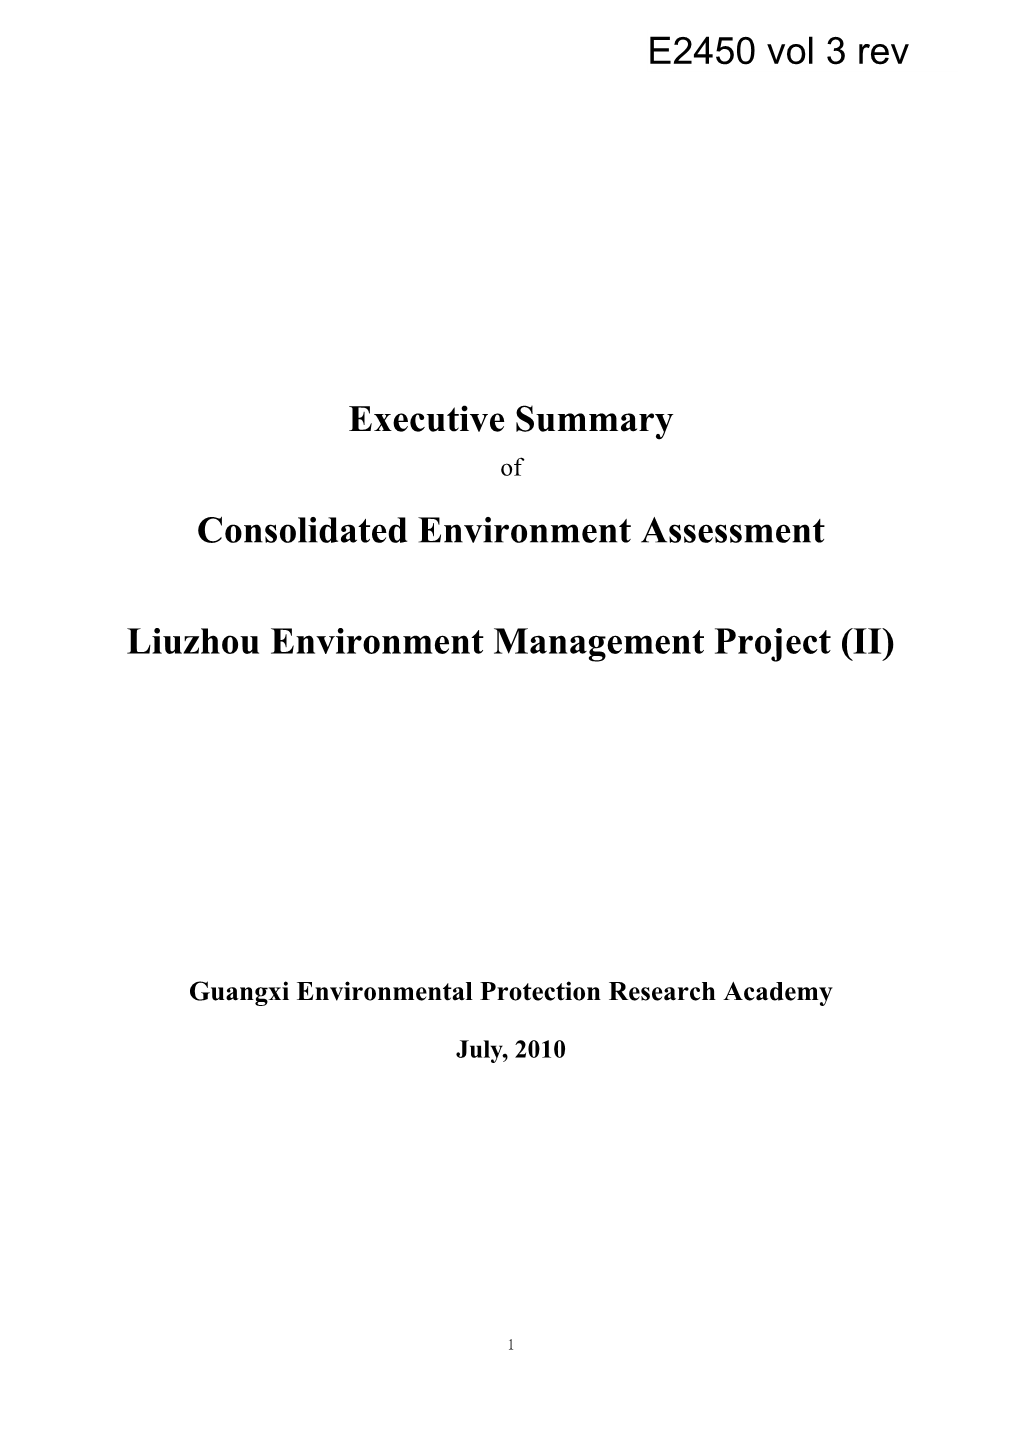 Liuzhou Environment Management Project (II)